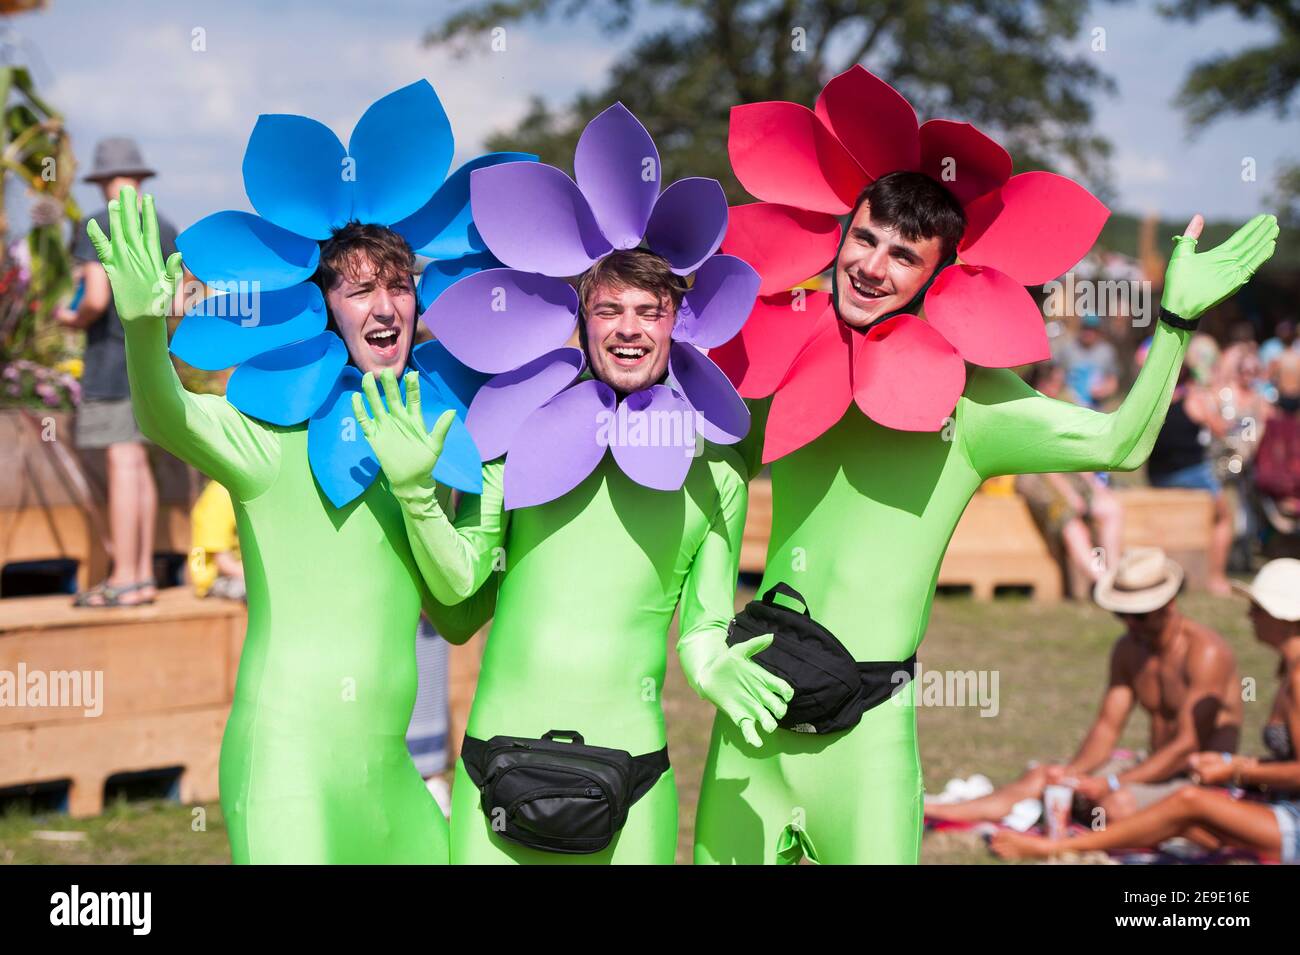 Festival goers in flower costume fancy dress enjoy the fine weather at Shambala Festival, Northamptonshire, UK Stock Photo